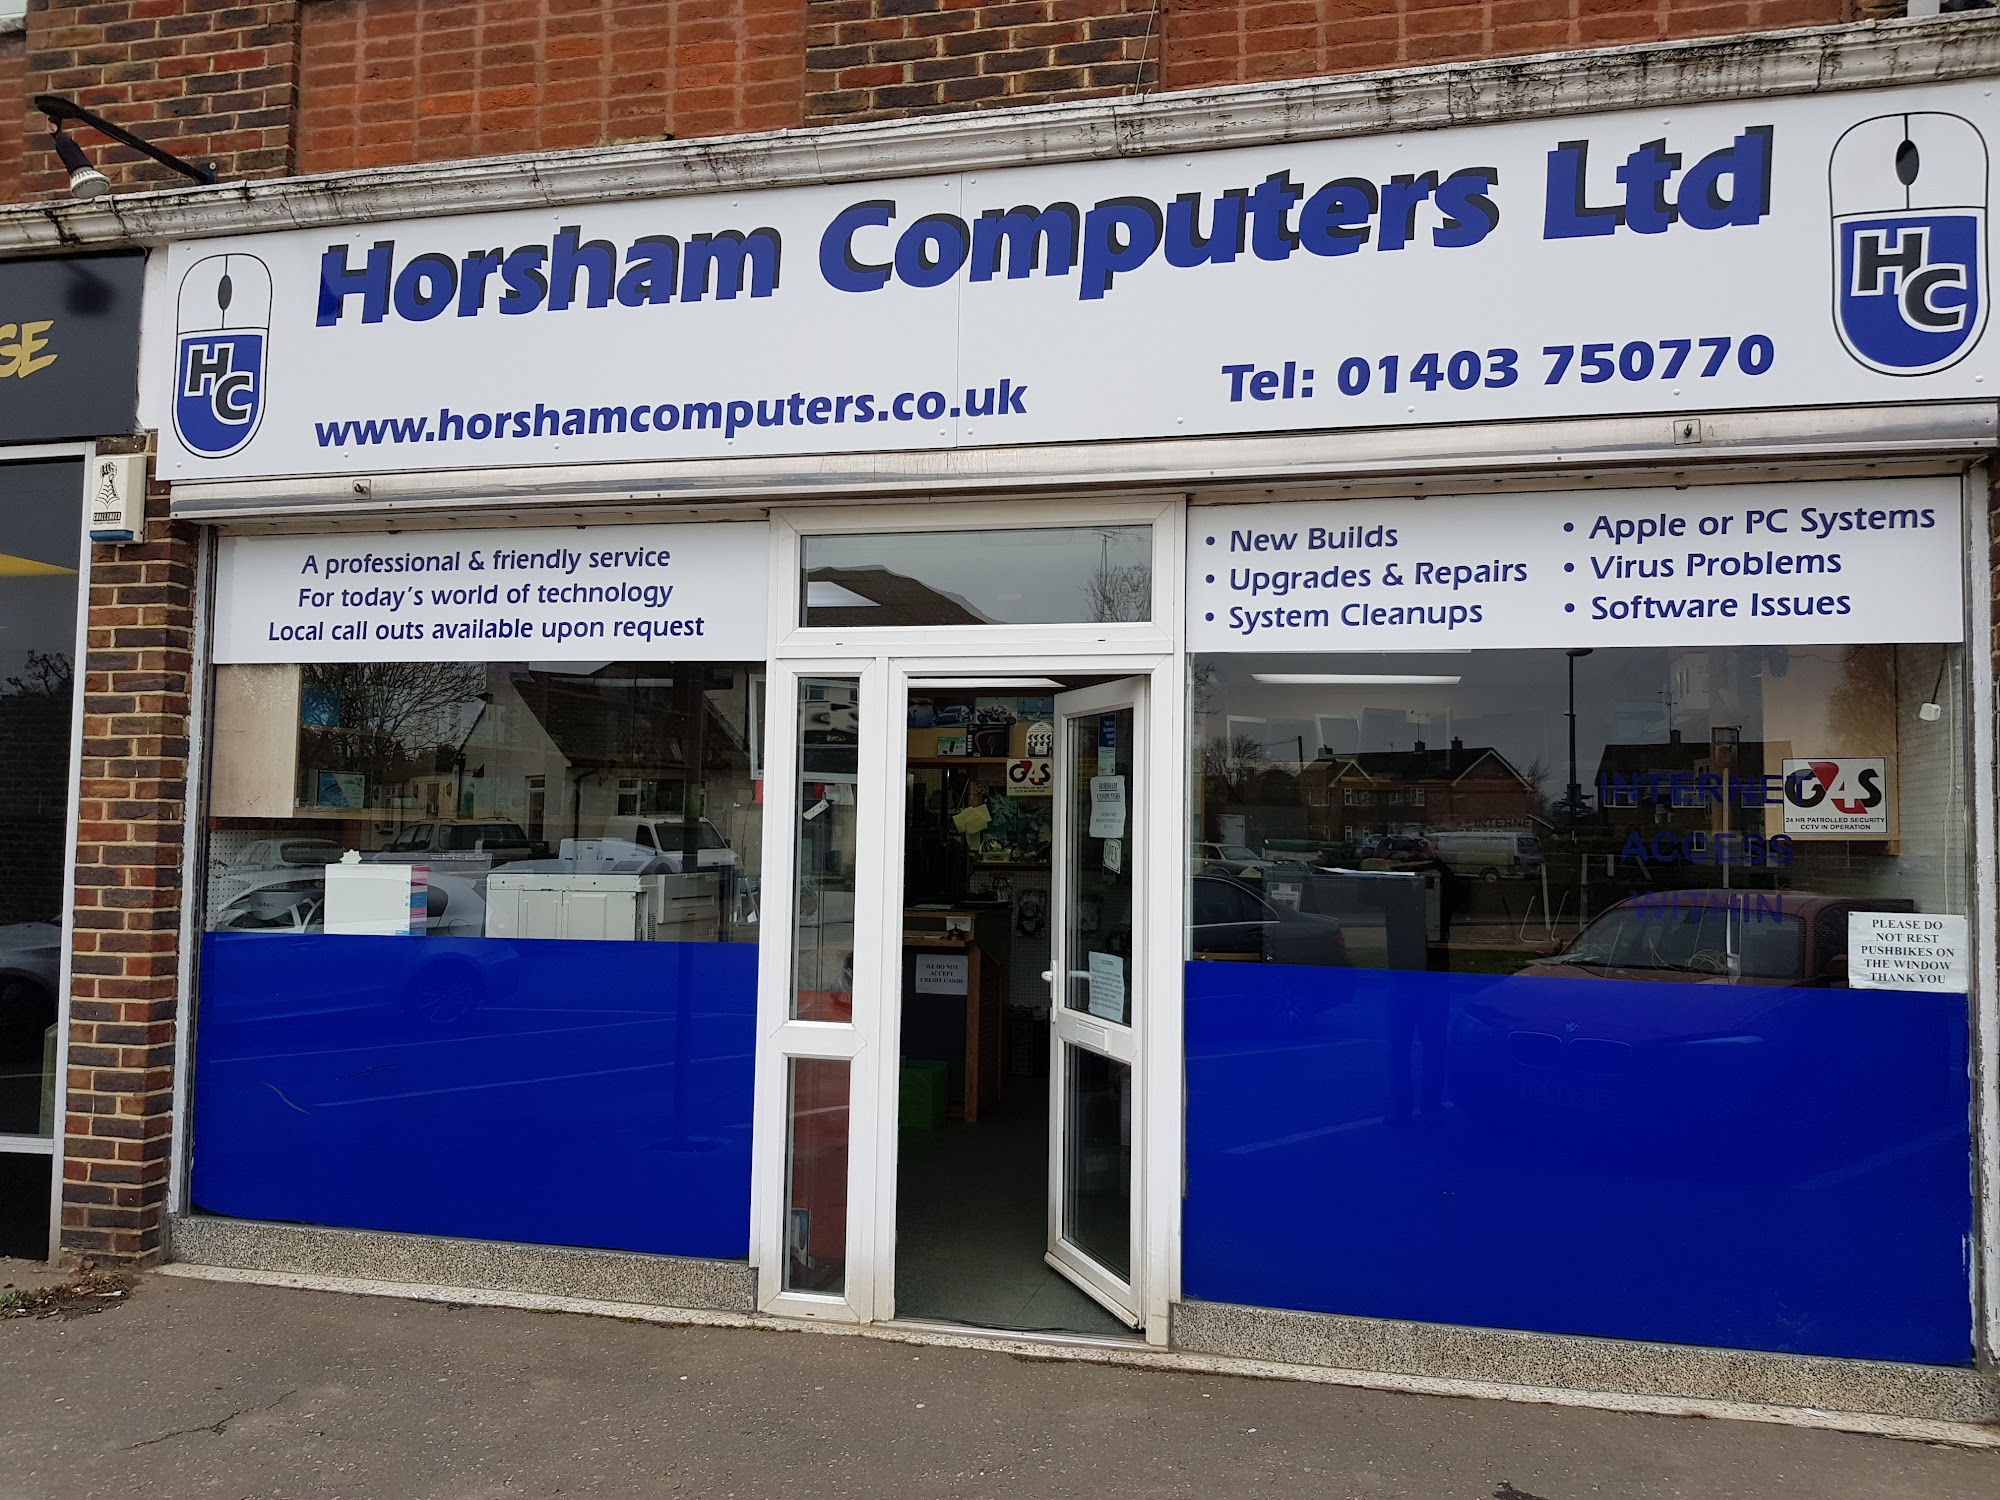 Horsham Computers Ltd